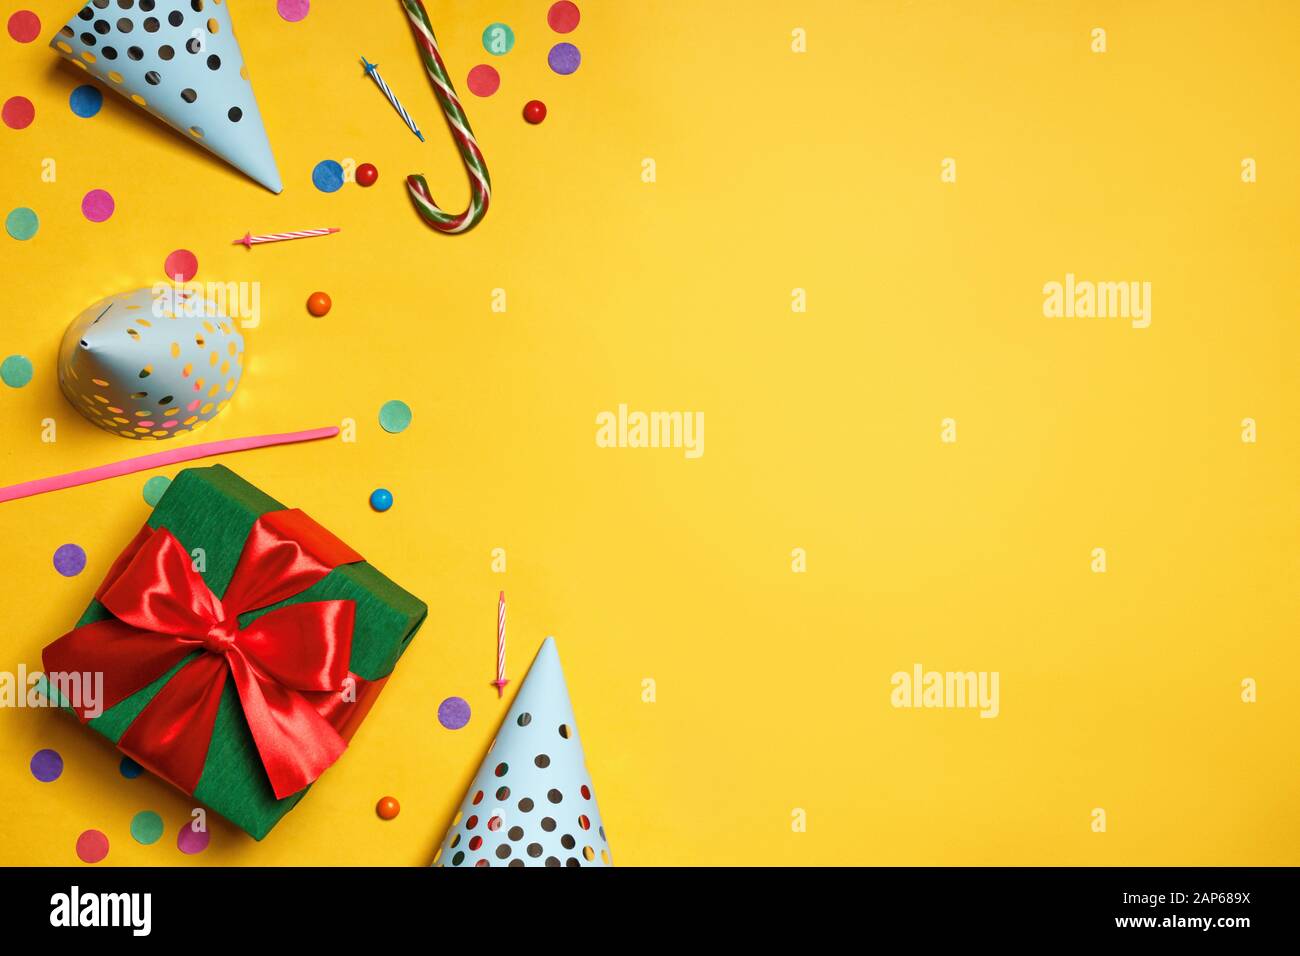 Cumpleaños fondo amarillo con fiesta gorras regalos confetti dulce copia espacio. Foto de stock